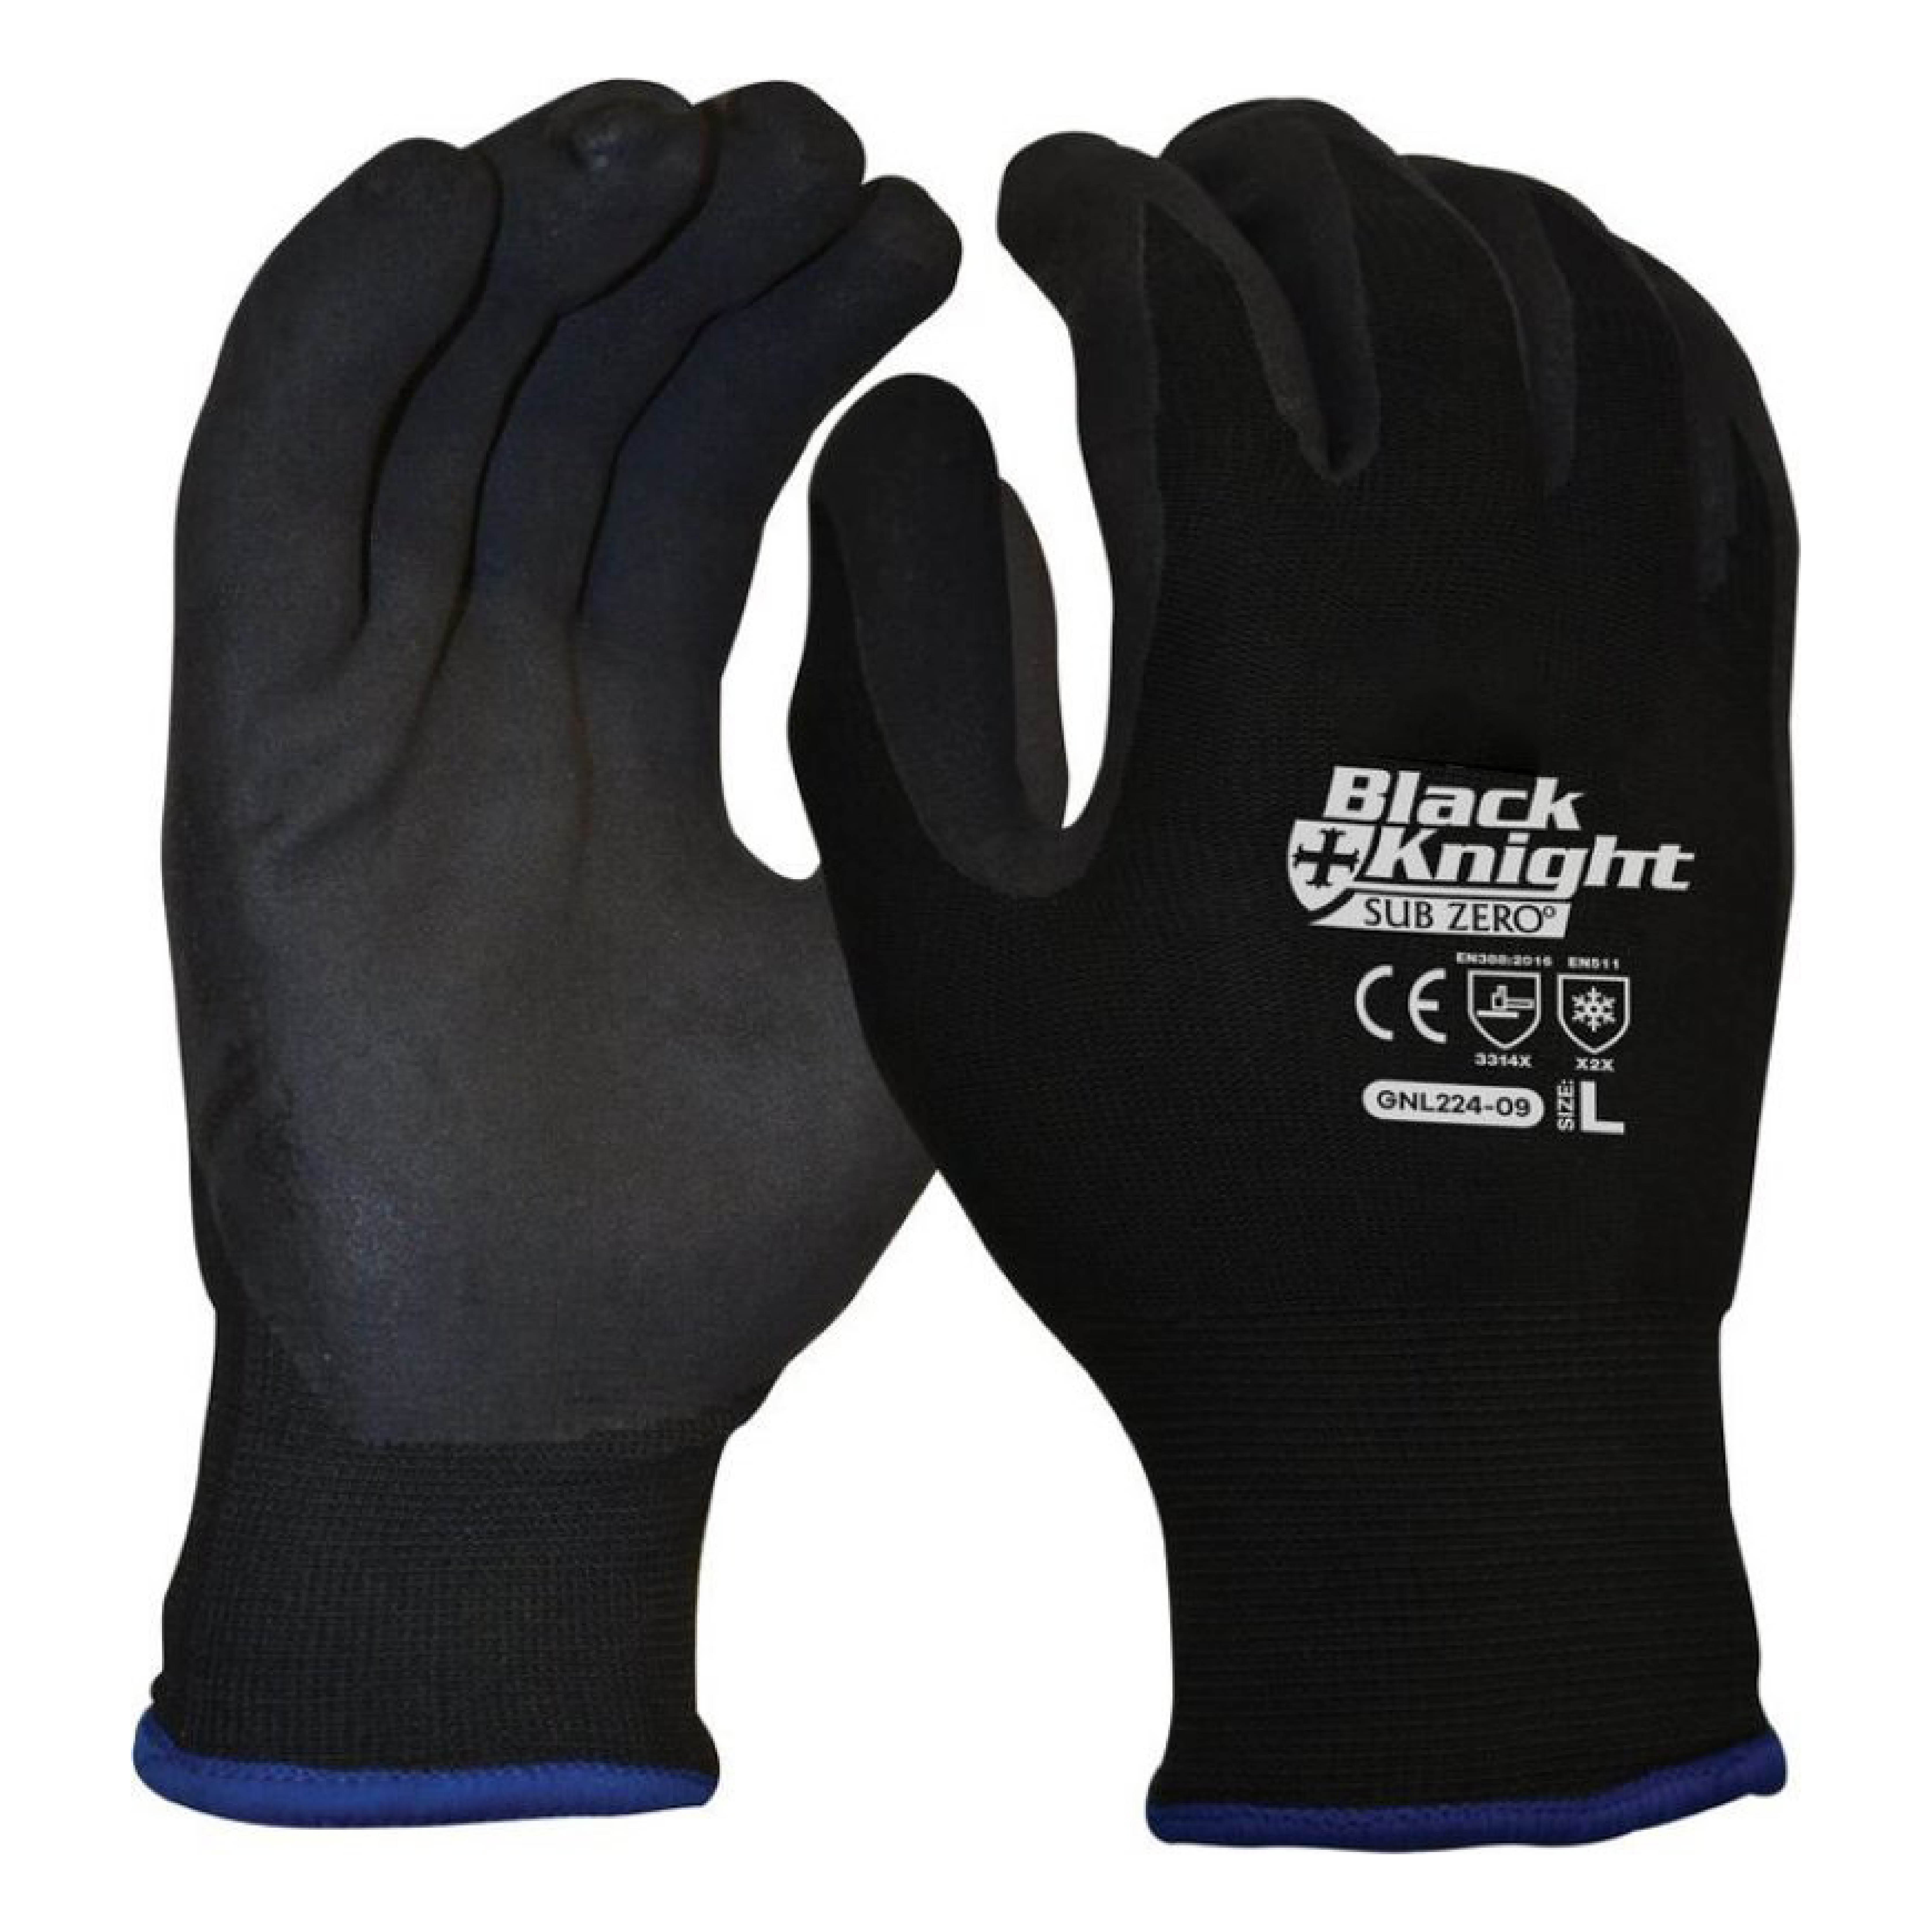 Black Knight Sub Zero Thermal Glove (Pair)